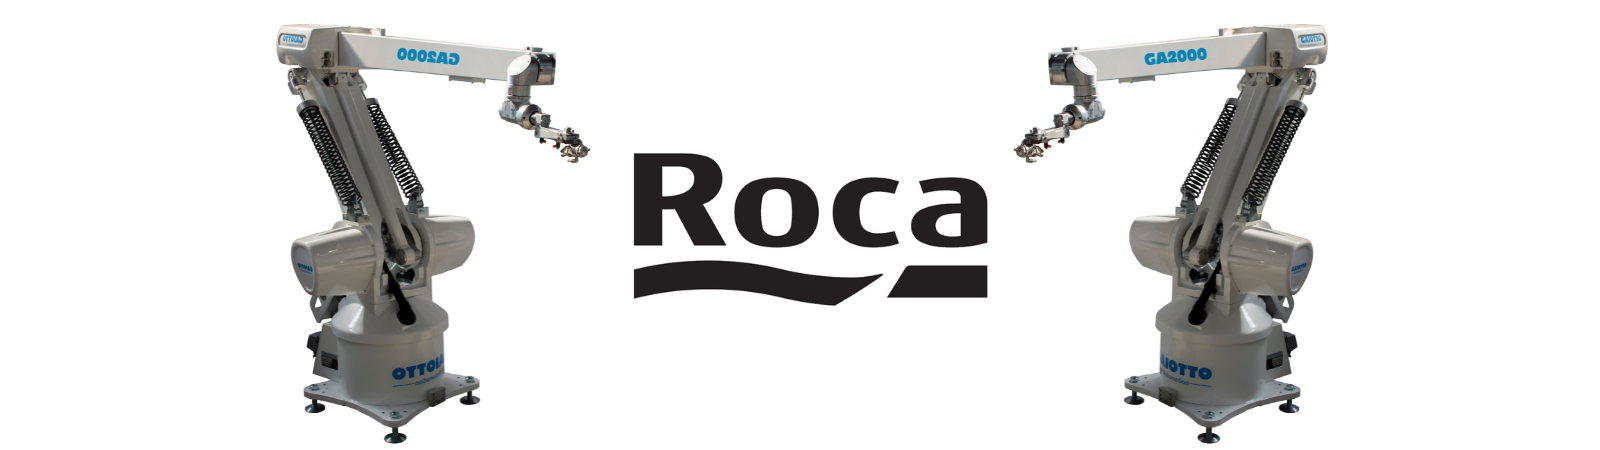 Roca Sanitarios Brasil chooses SACMI’s robotized glazing technology 